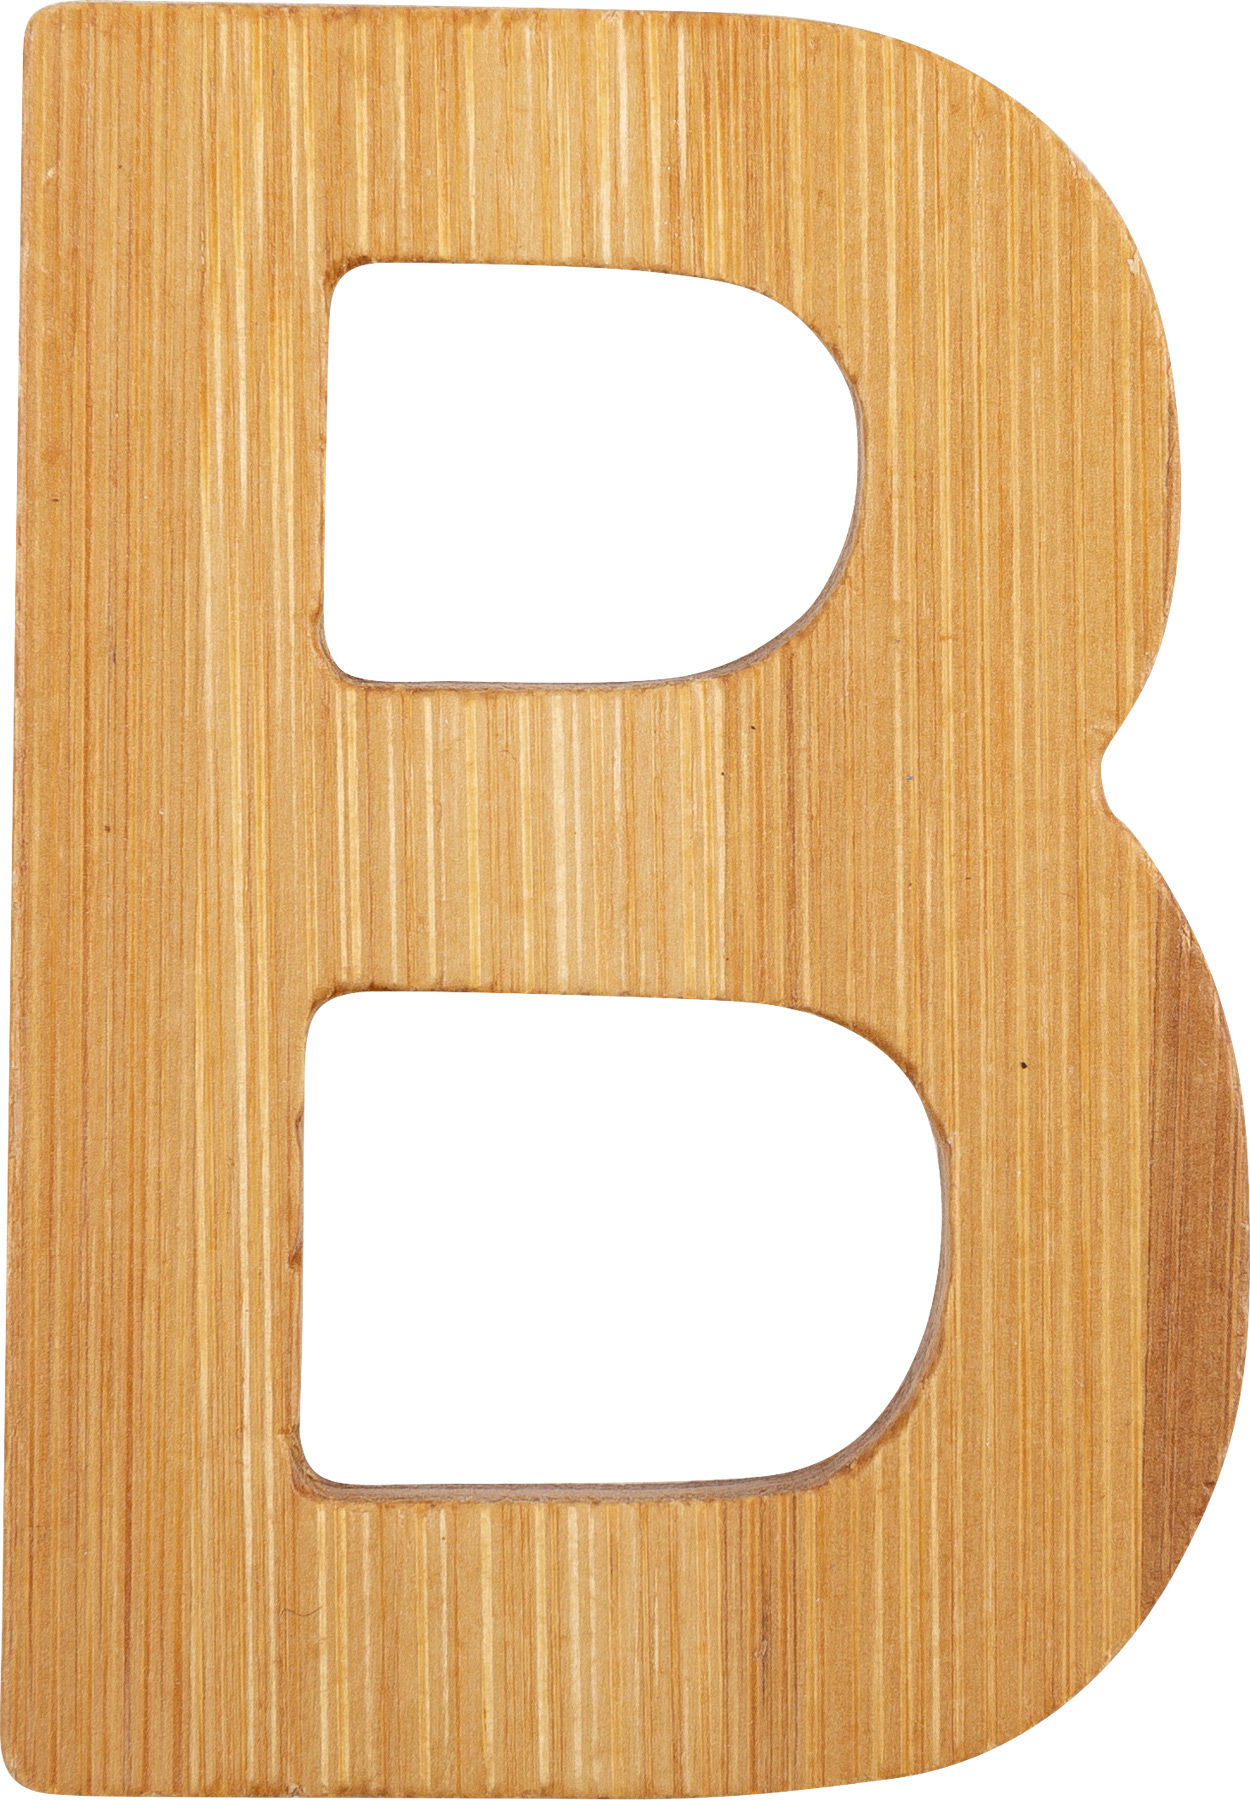 ABC Buchstaben Bambus B